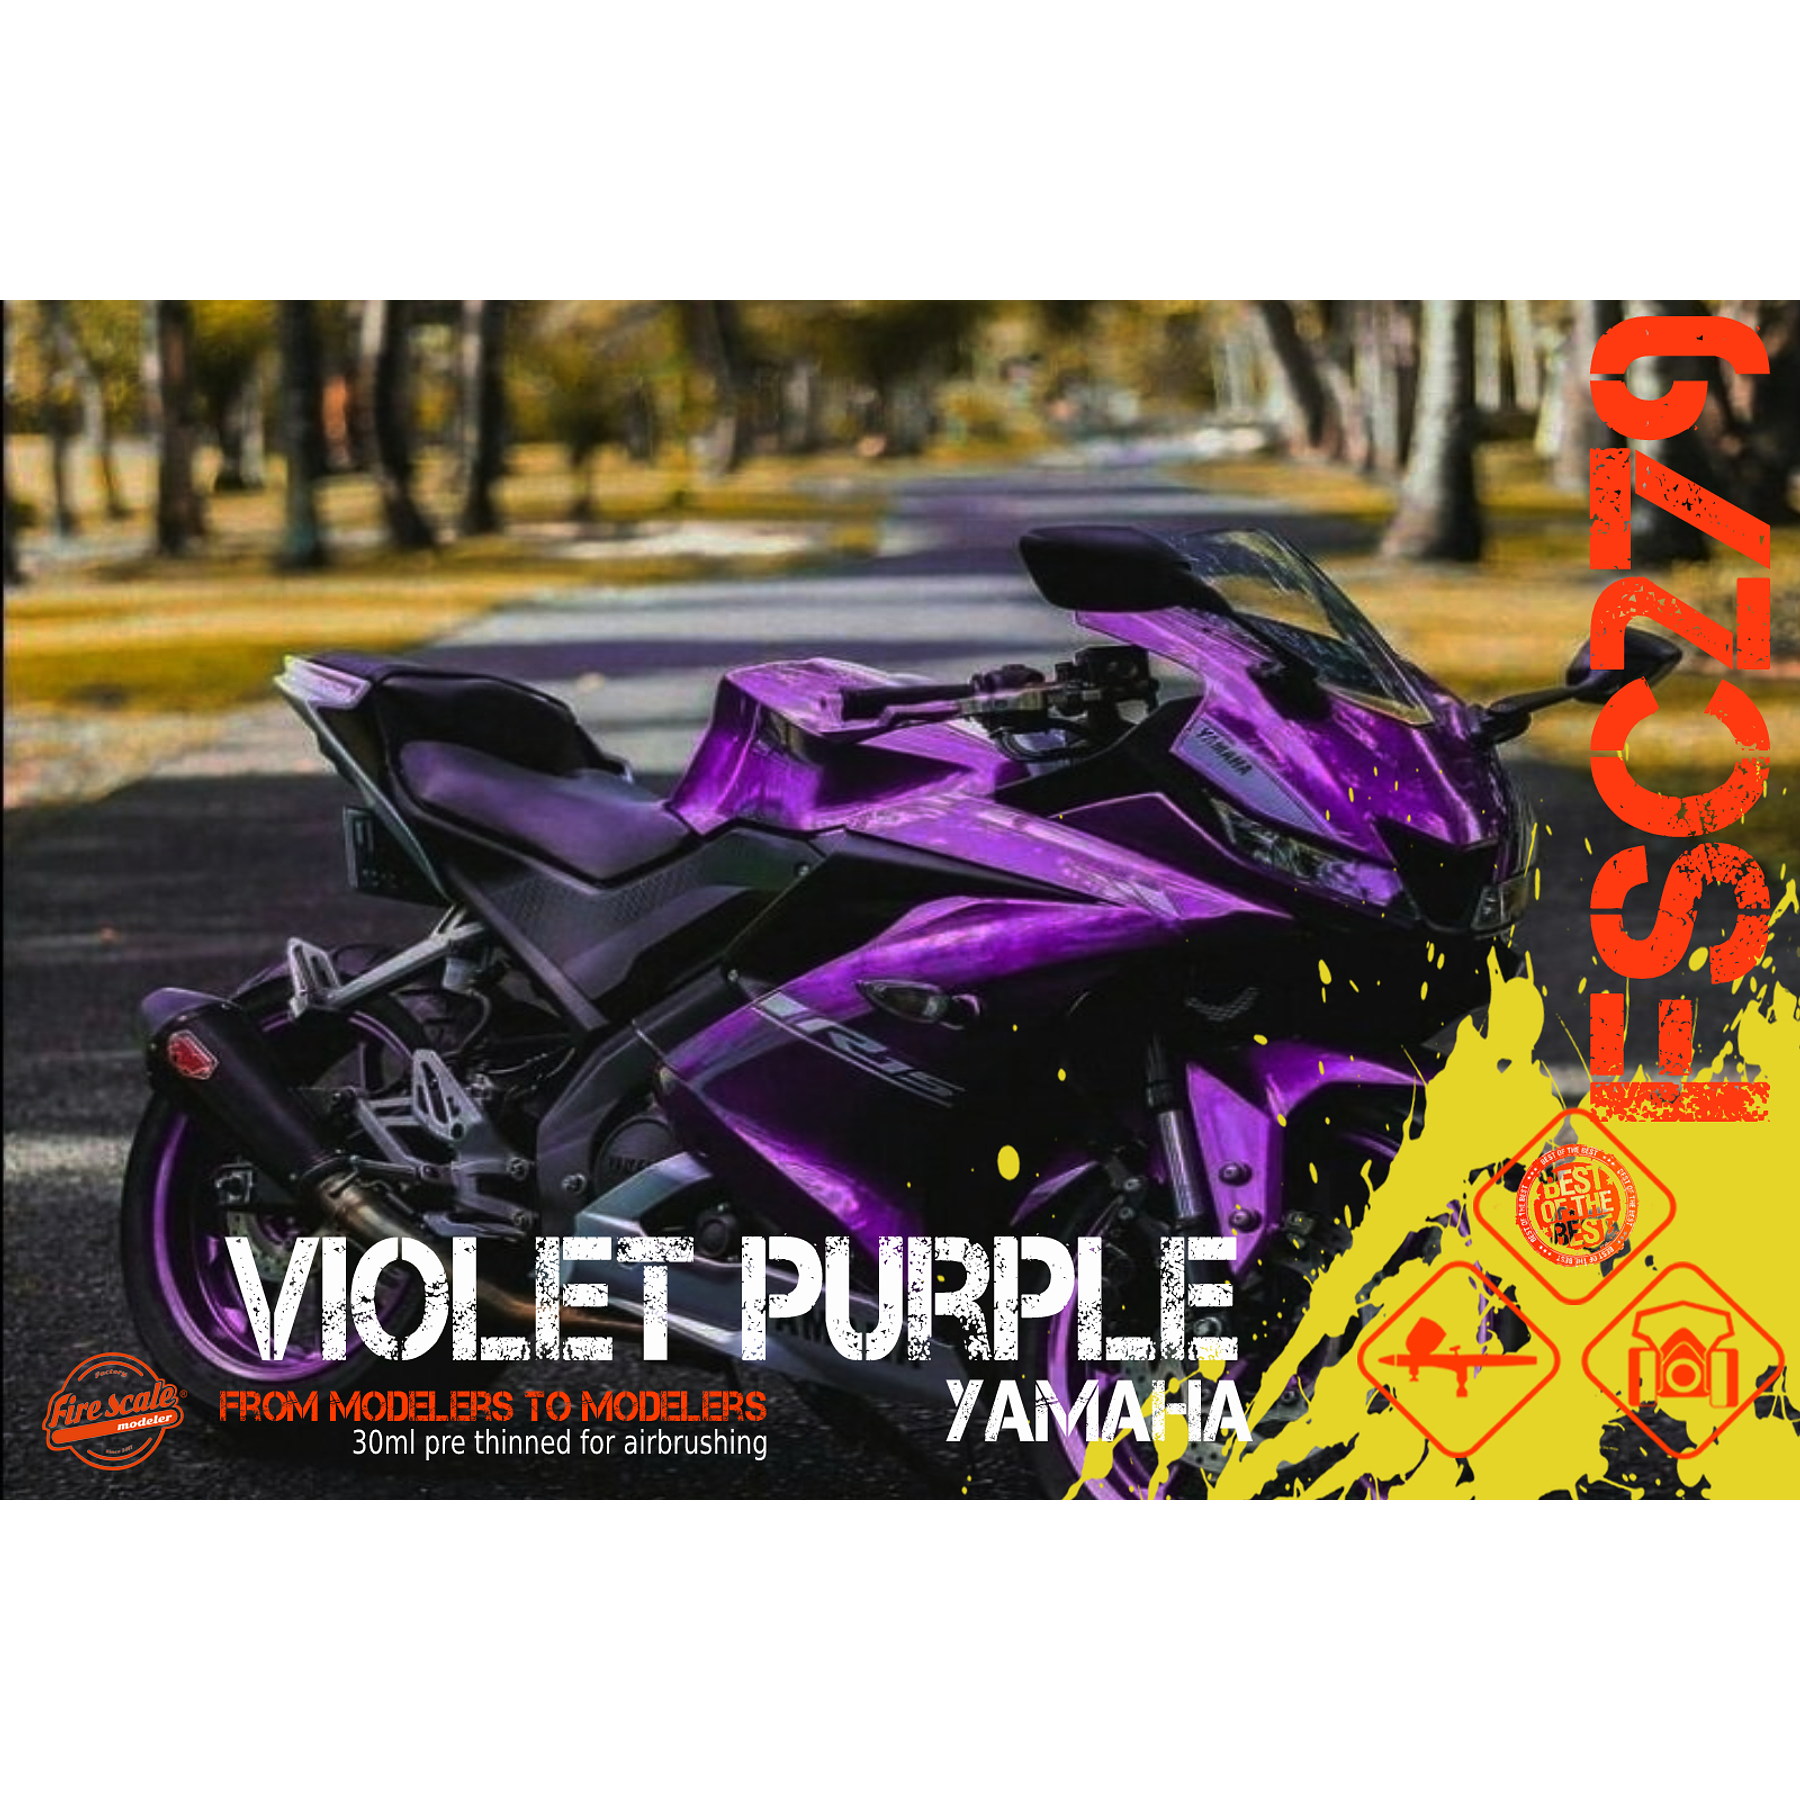 Violet Purple Yamaha